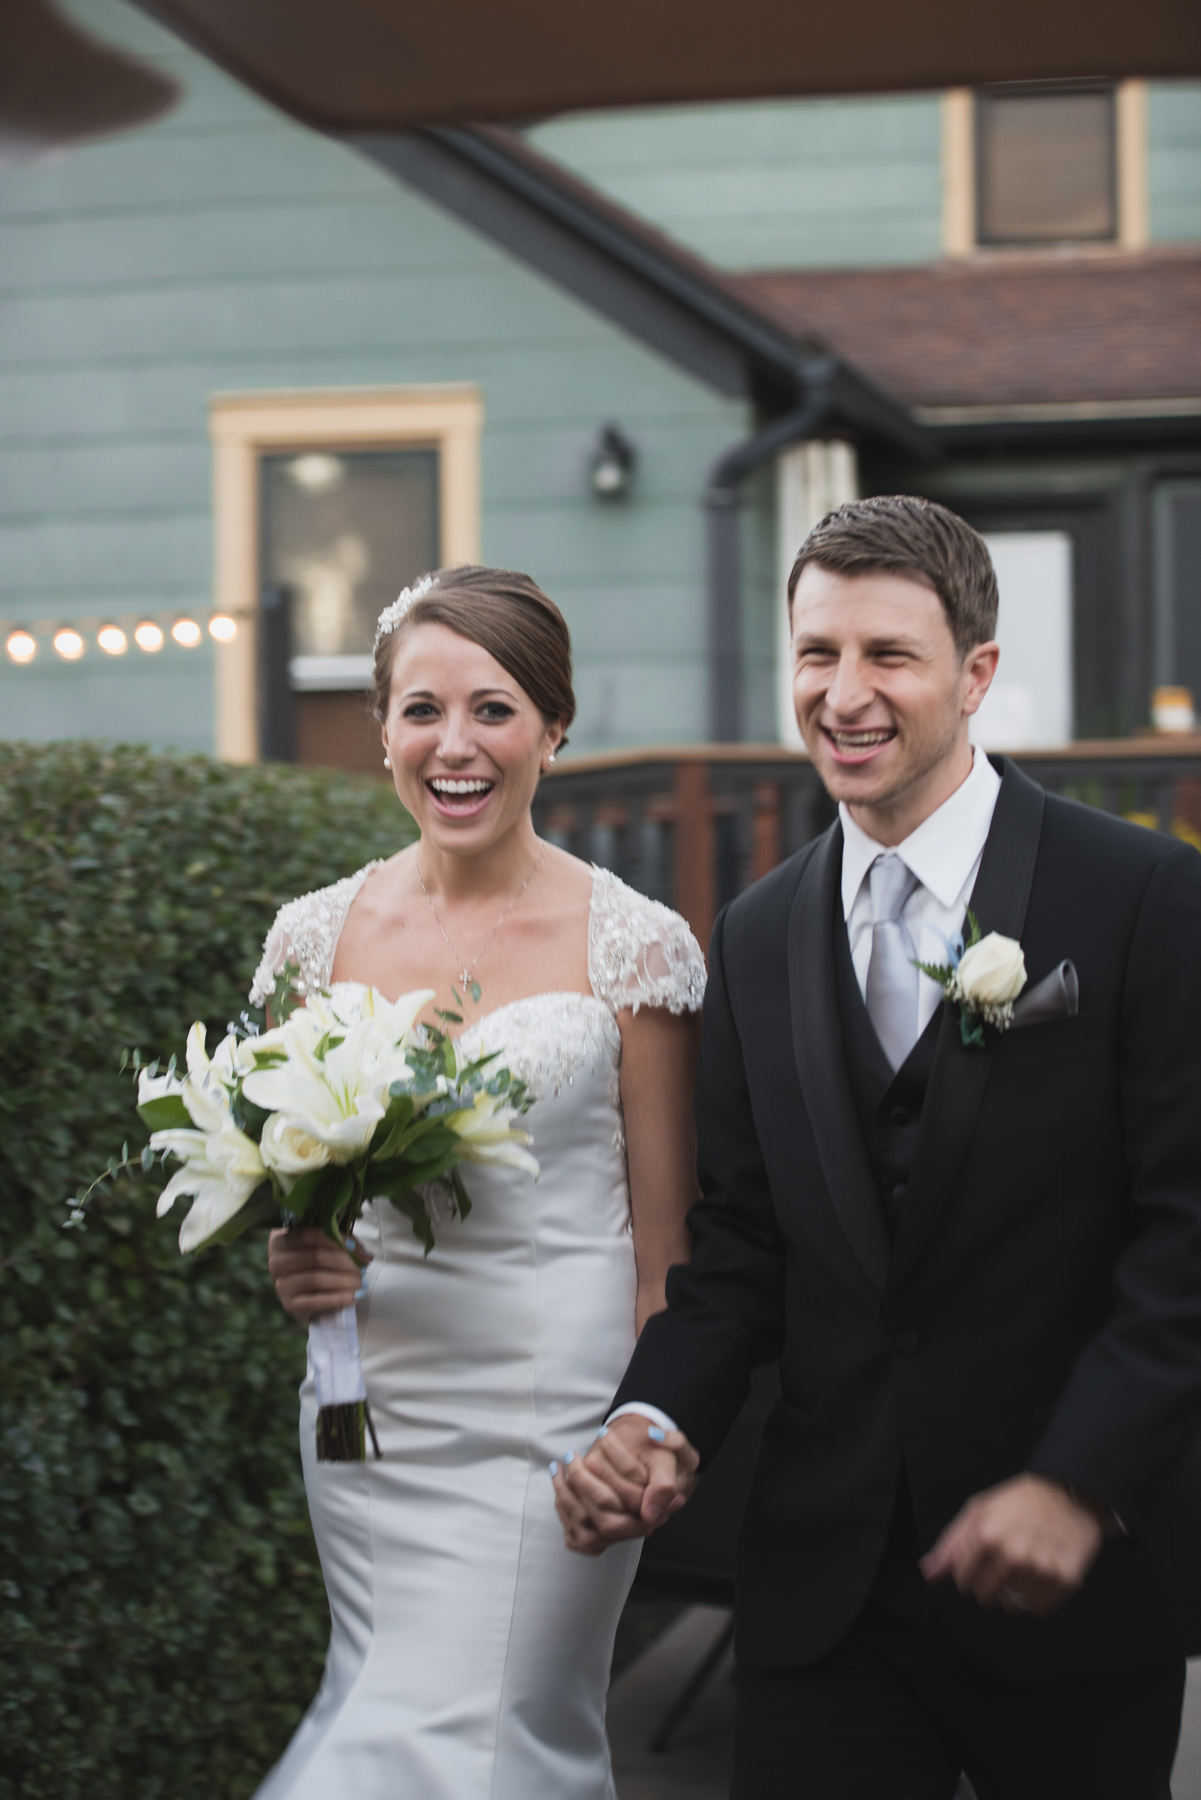 Spencer + Lauren | Best Cleveland Wedding Photographer